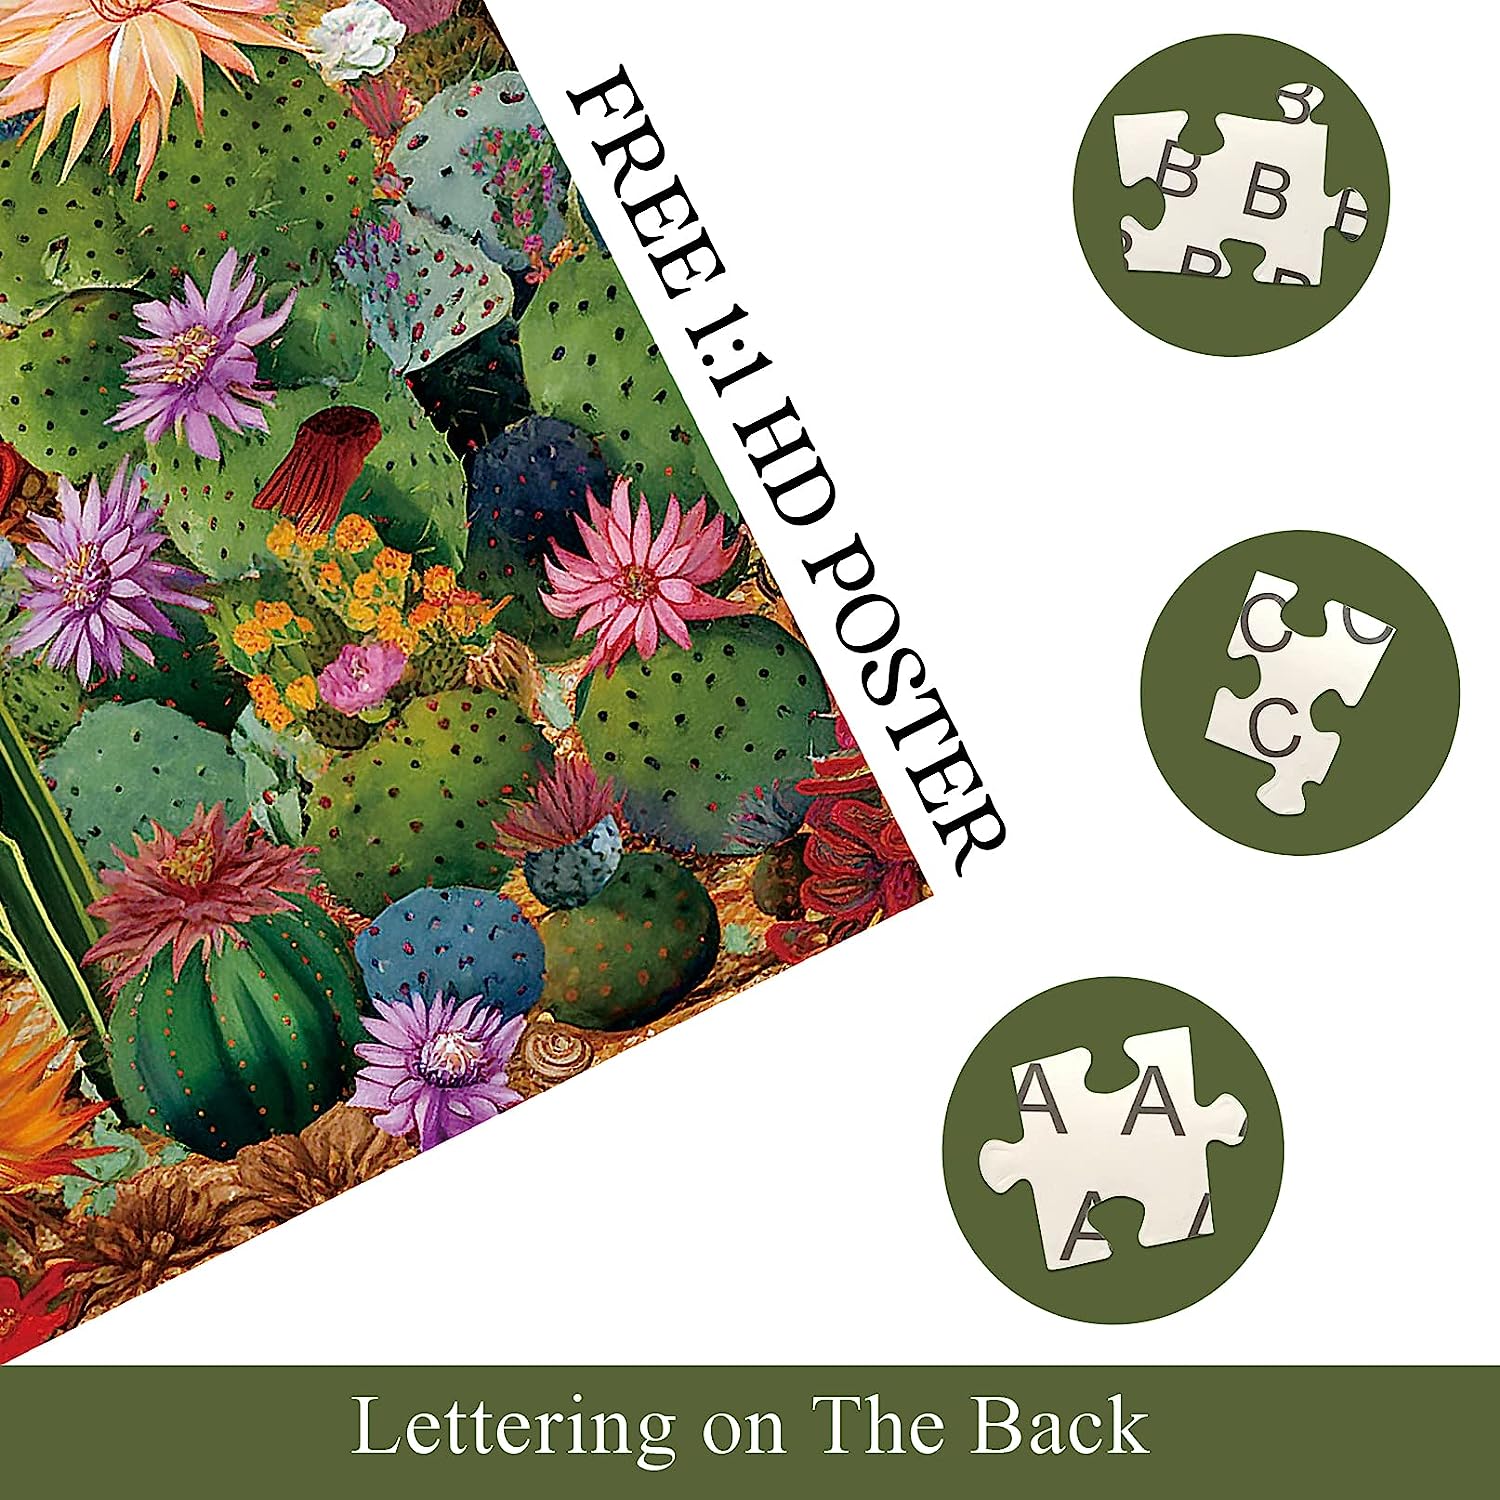 Pickforu® Puzzle Jardin de fleurs de cactus 1000 pièces